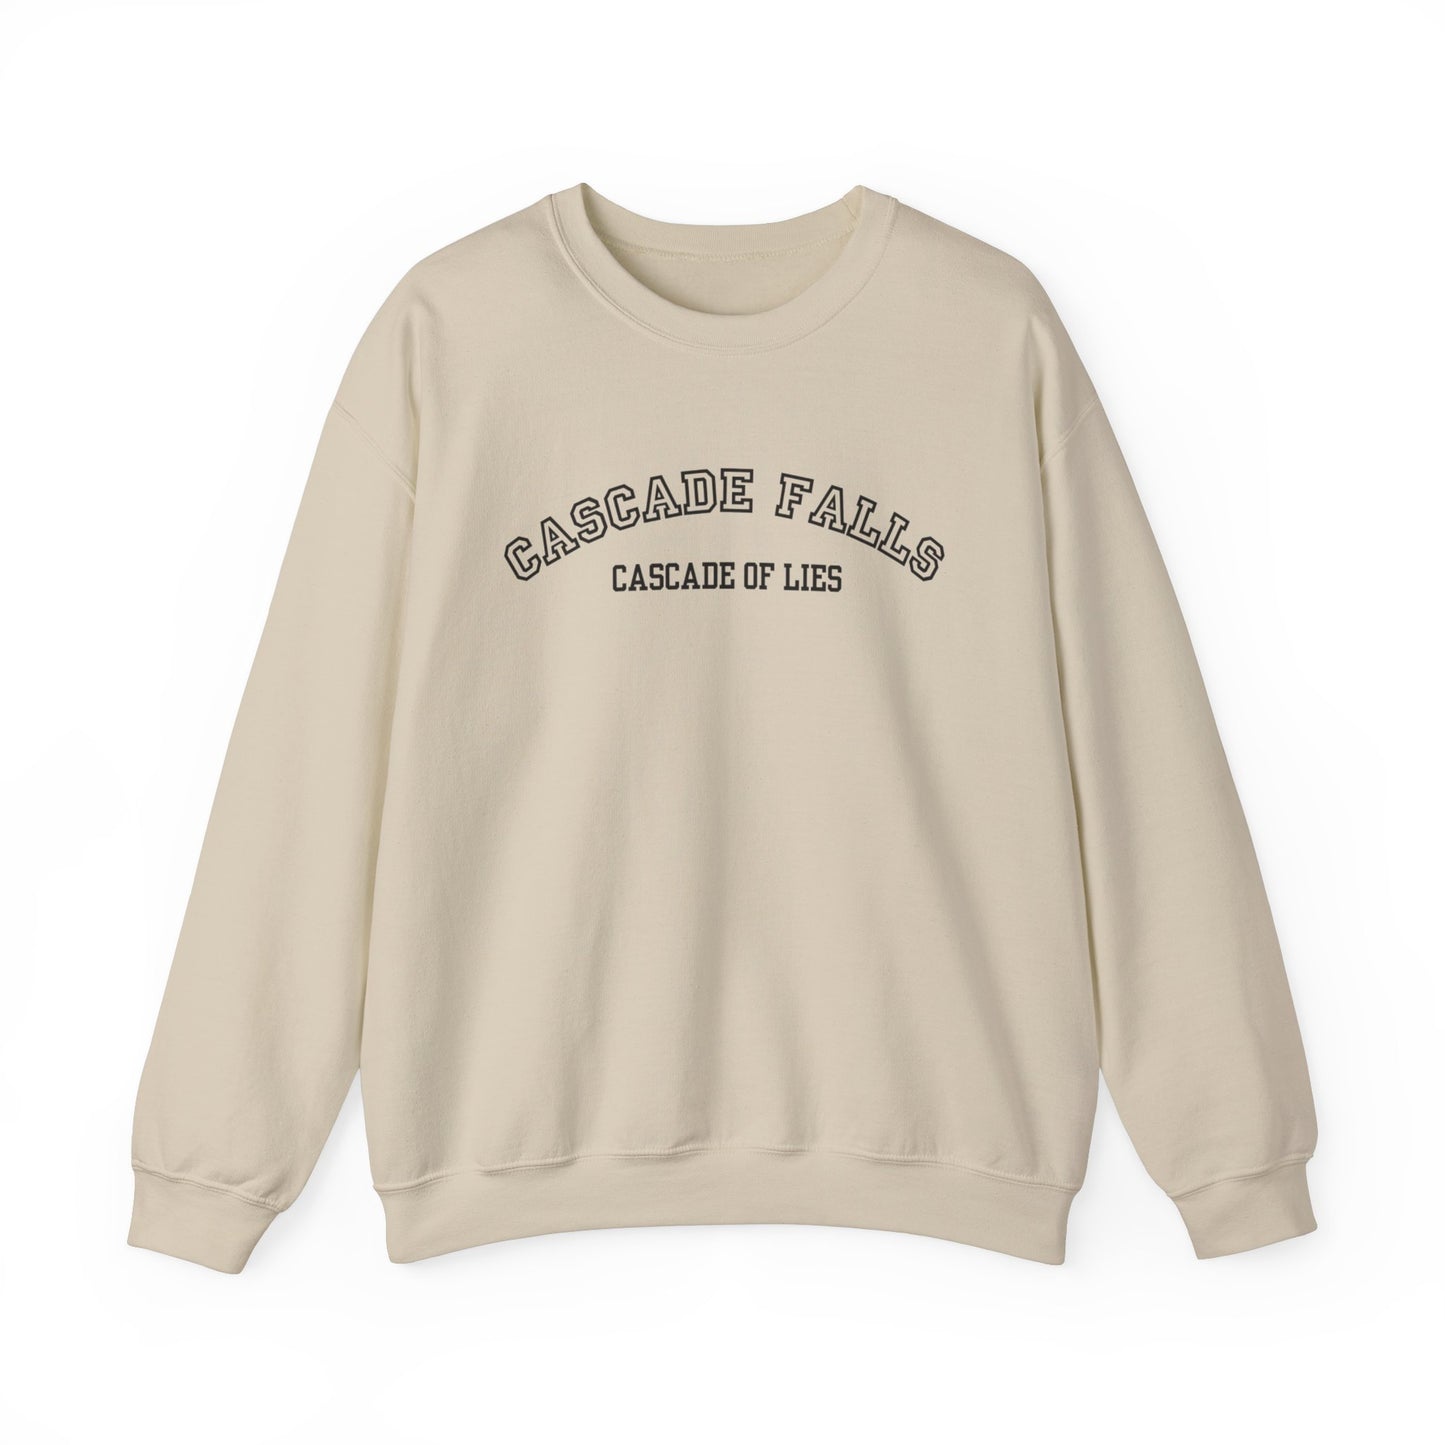 Cascade Falls Sweatshirt